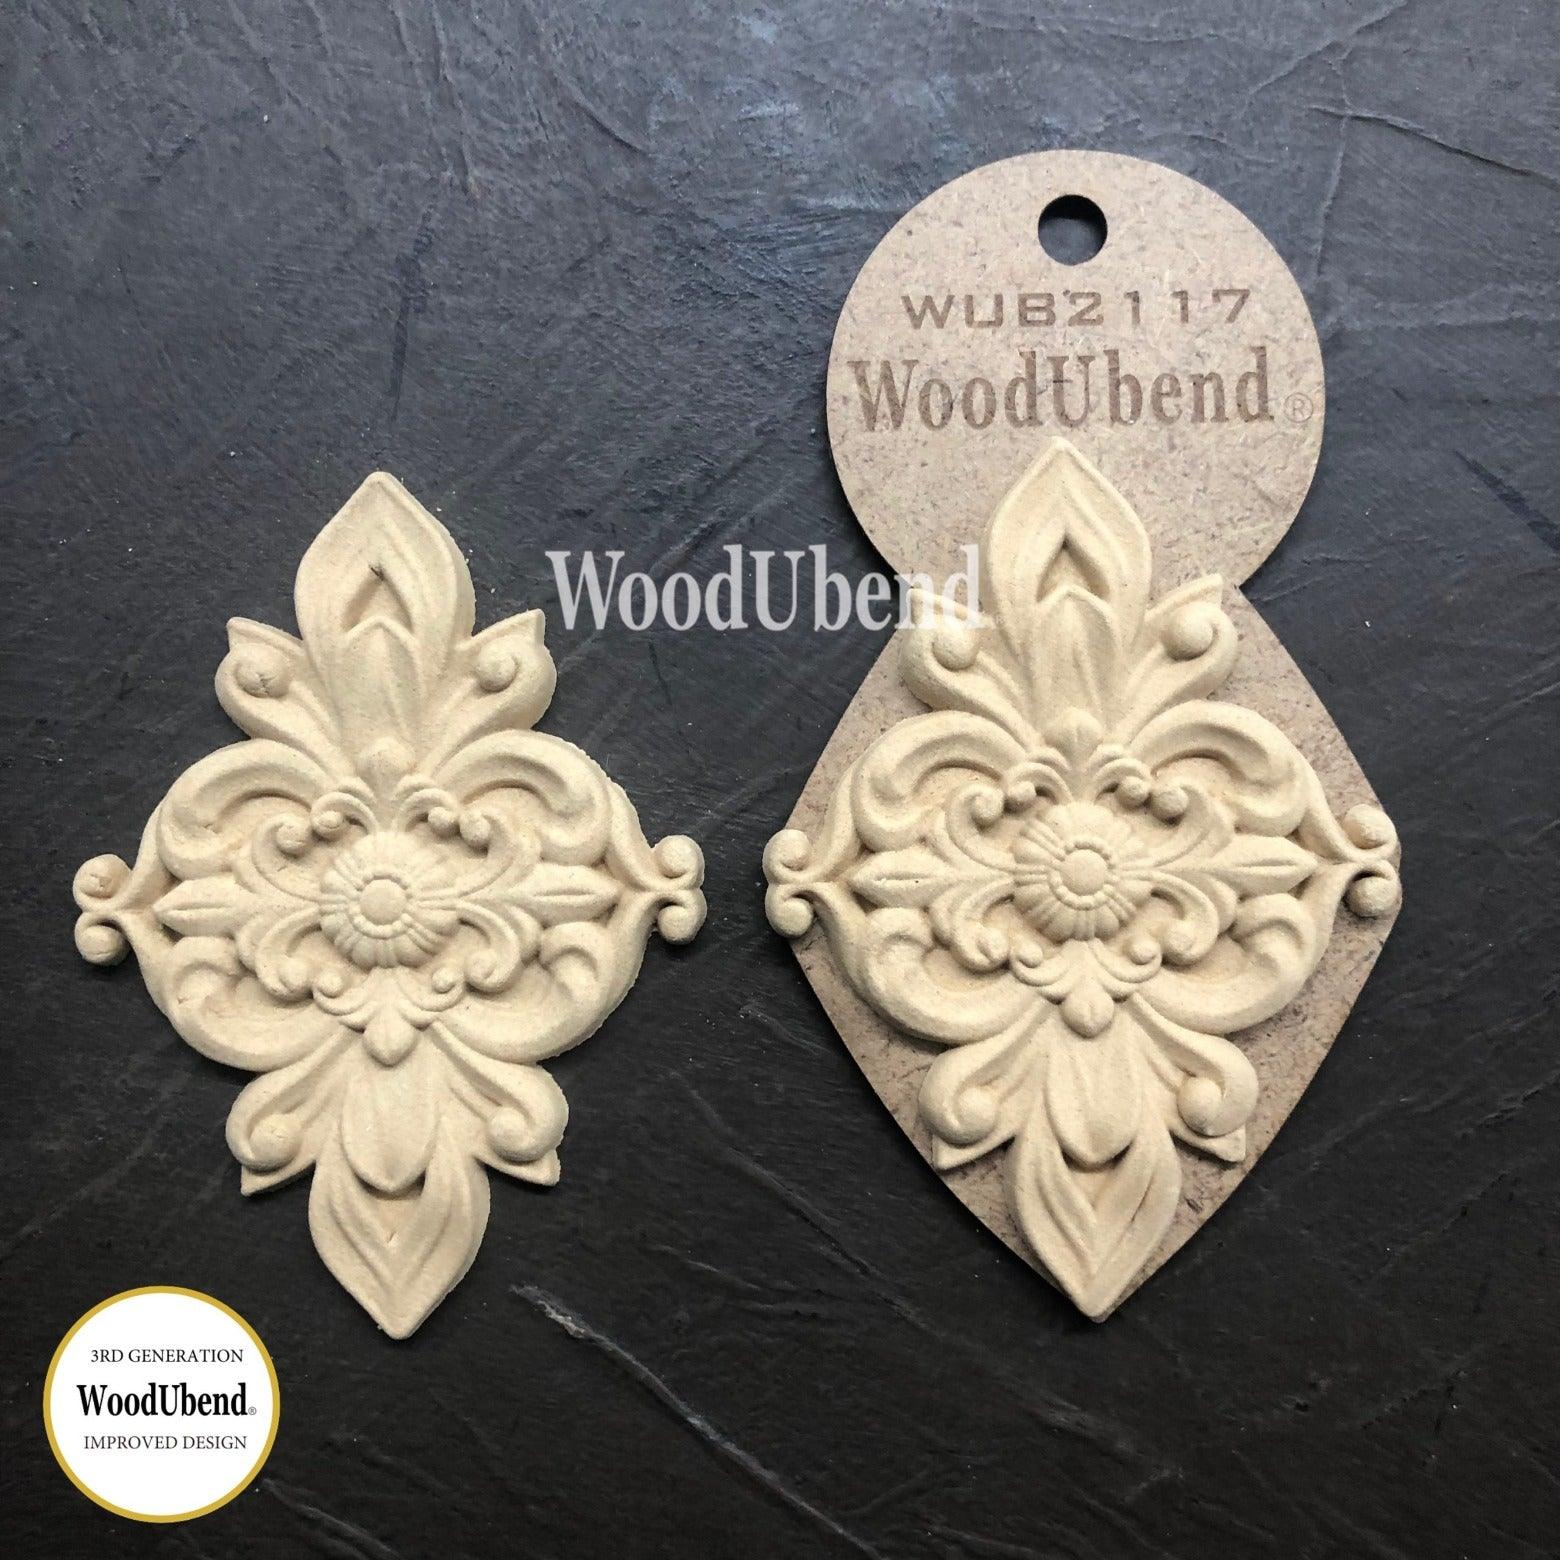 WUB2117_woodubend_moulding_wood_carving_germany_online_bestellen